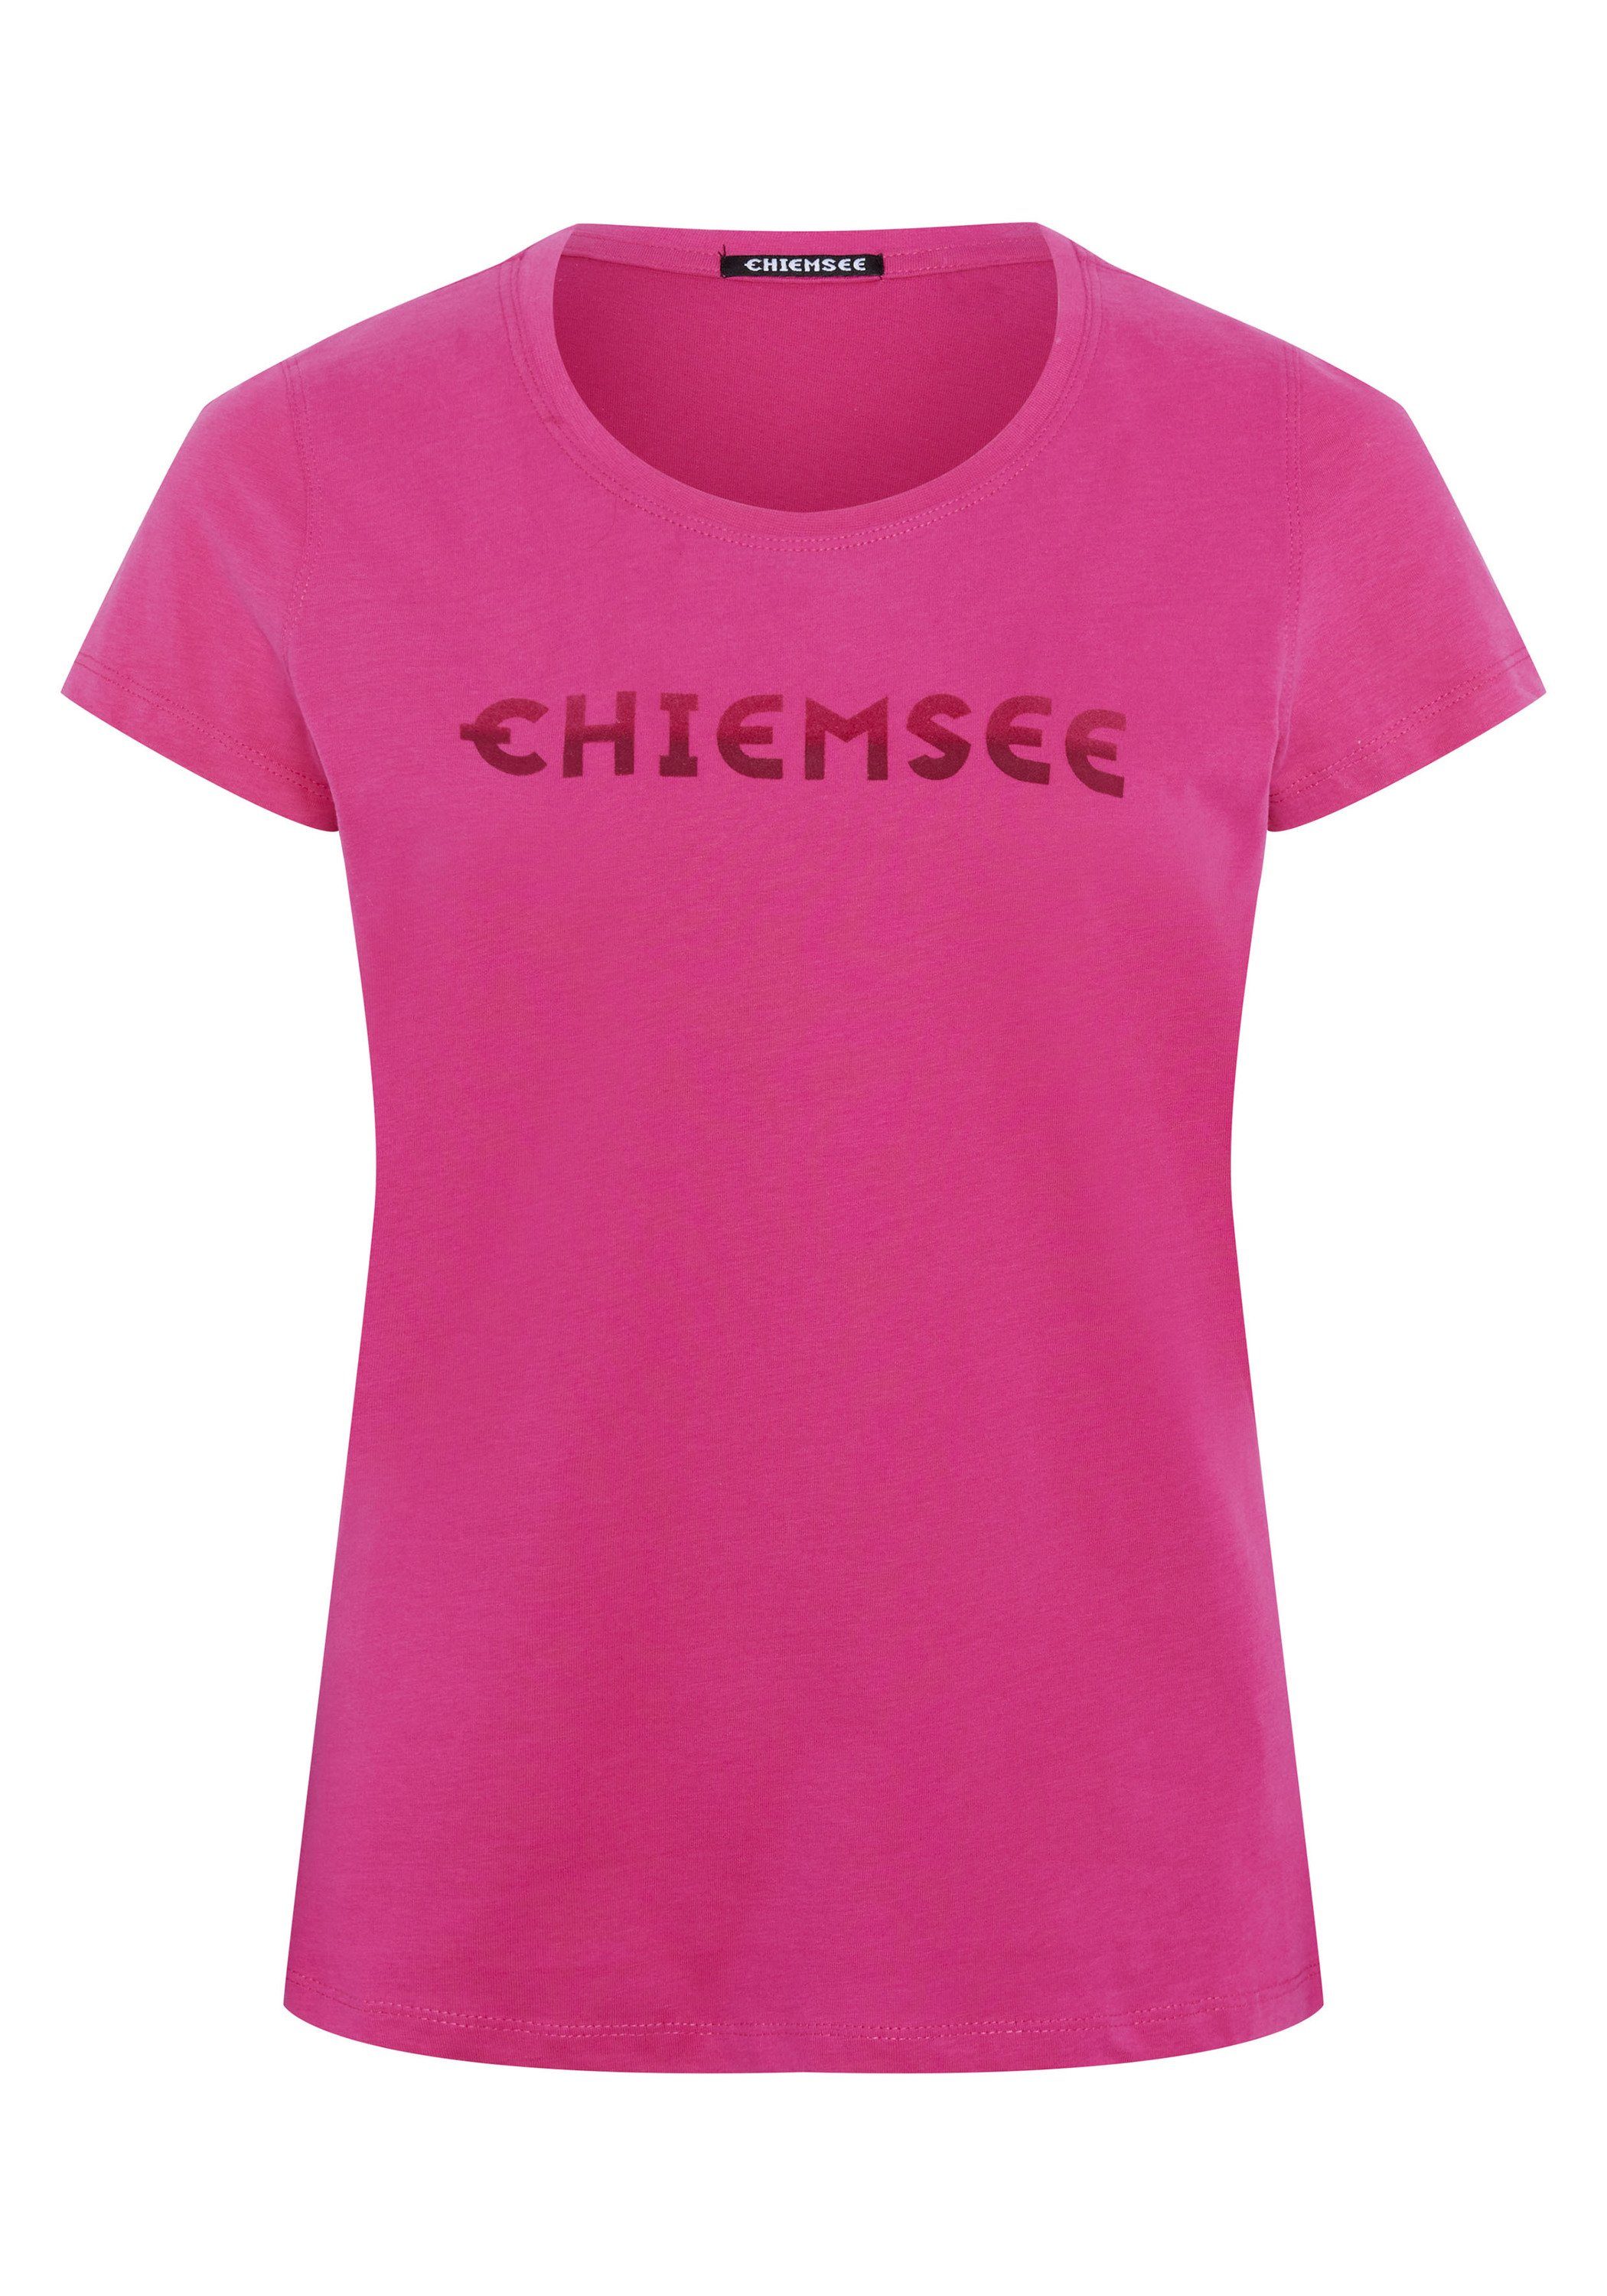 Chiemsee Print-Shirt T-Shirt mit Logo in Farbverlauf-Optik 1 Beetroot Purple